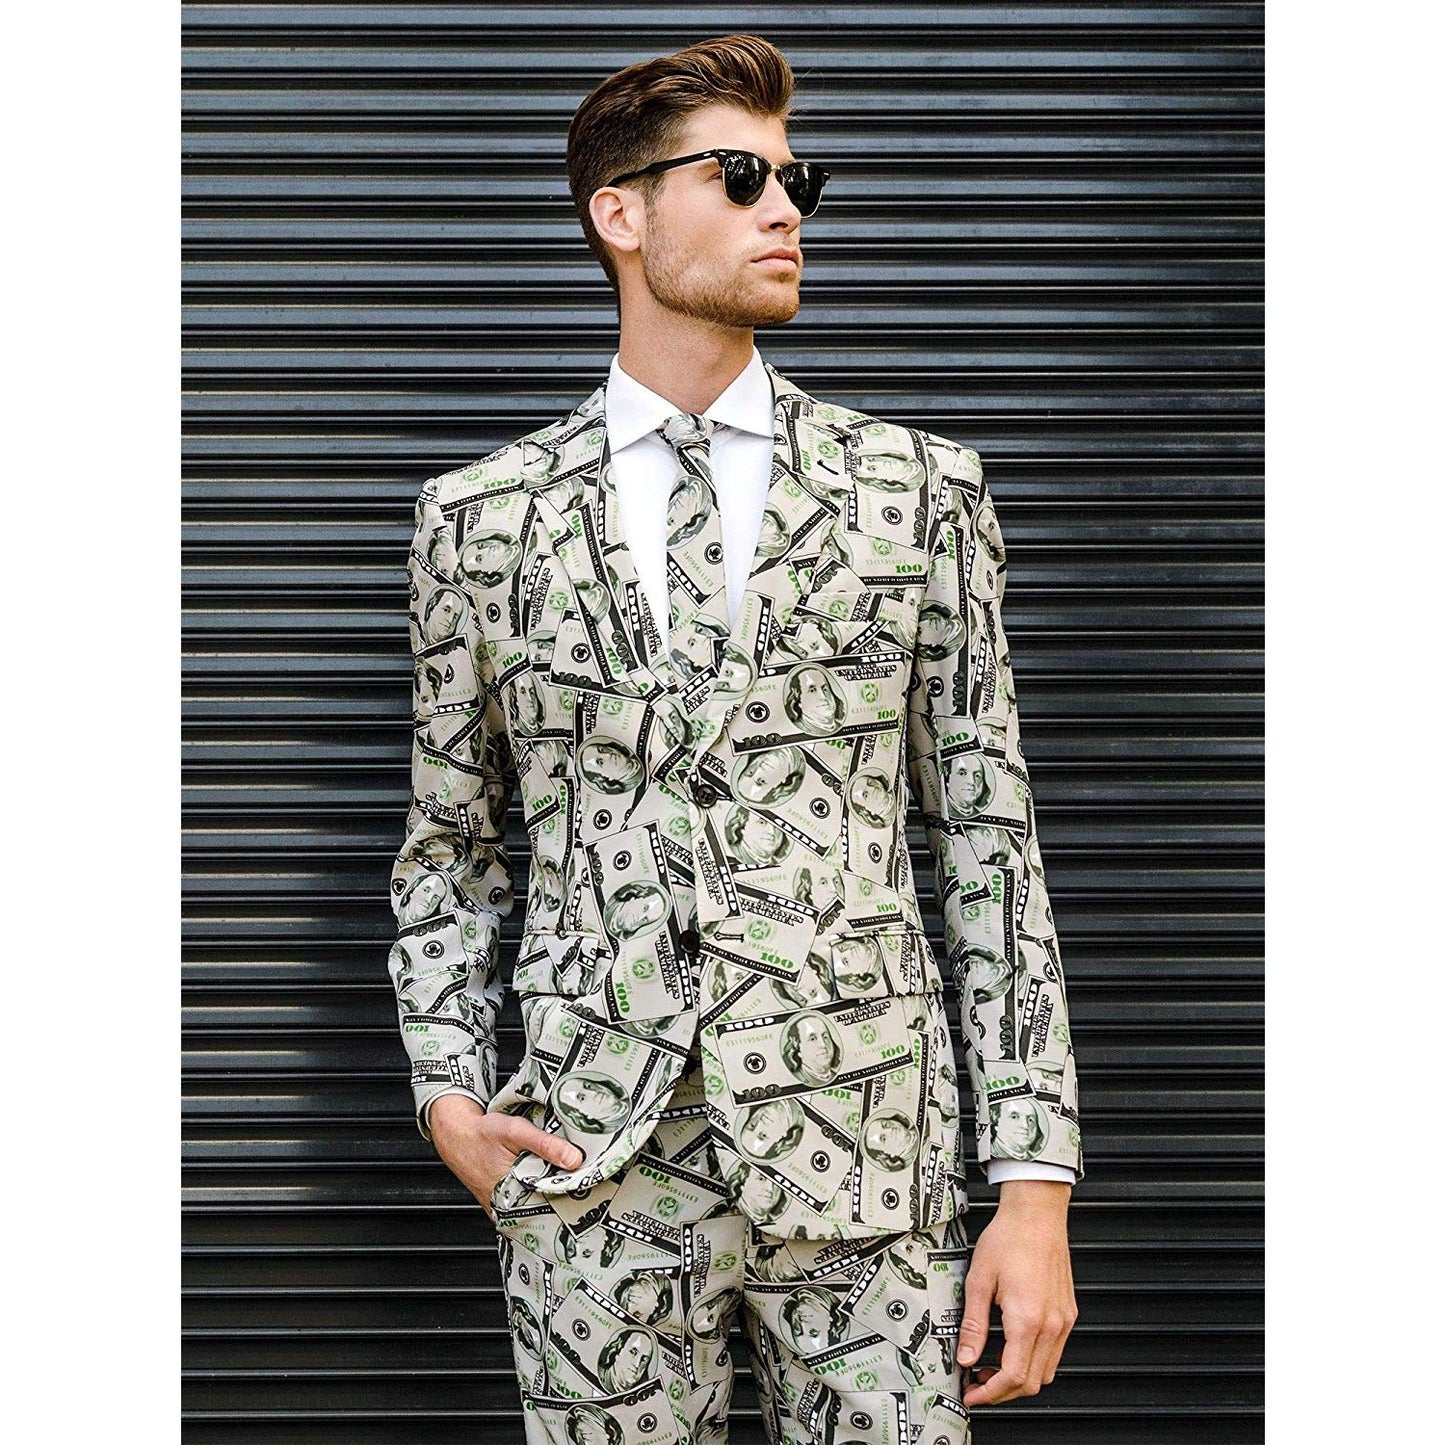 Money Suit - OddGifts.com